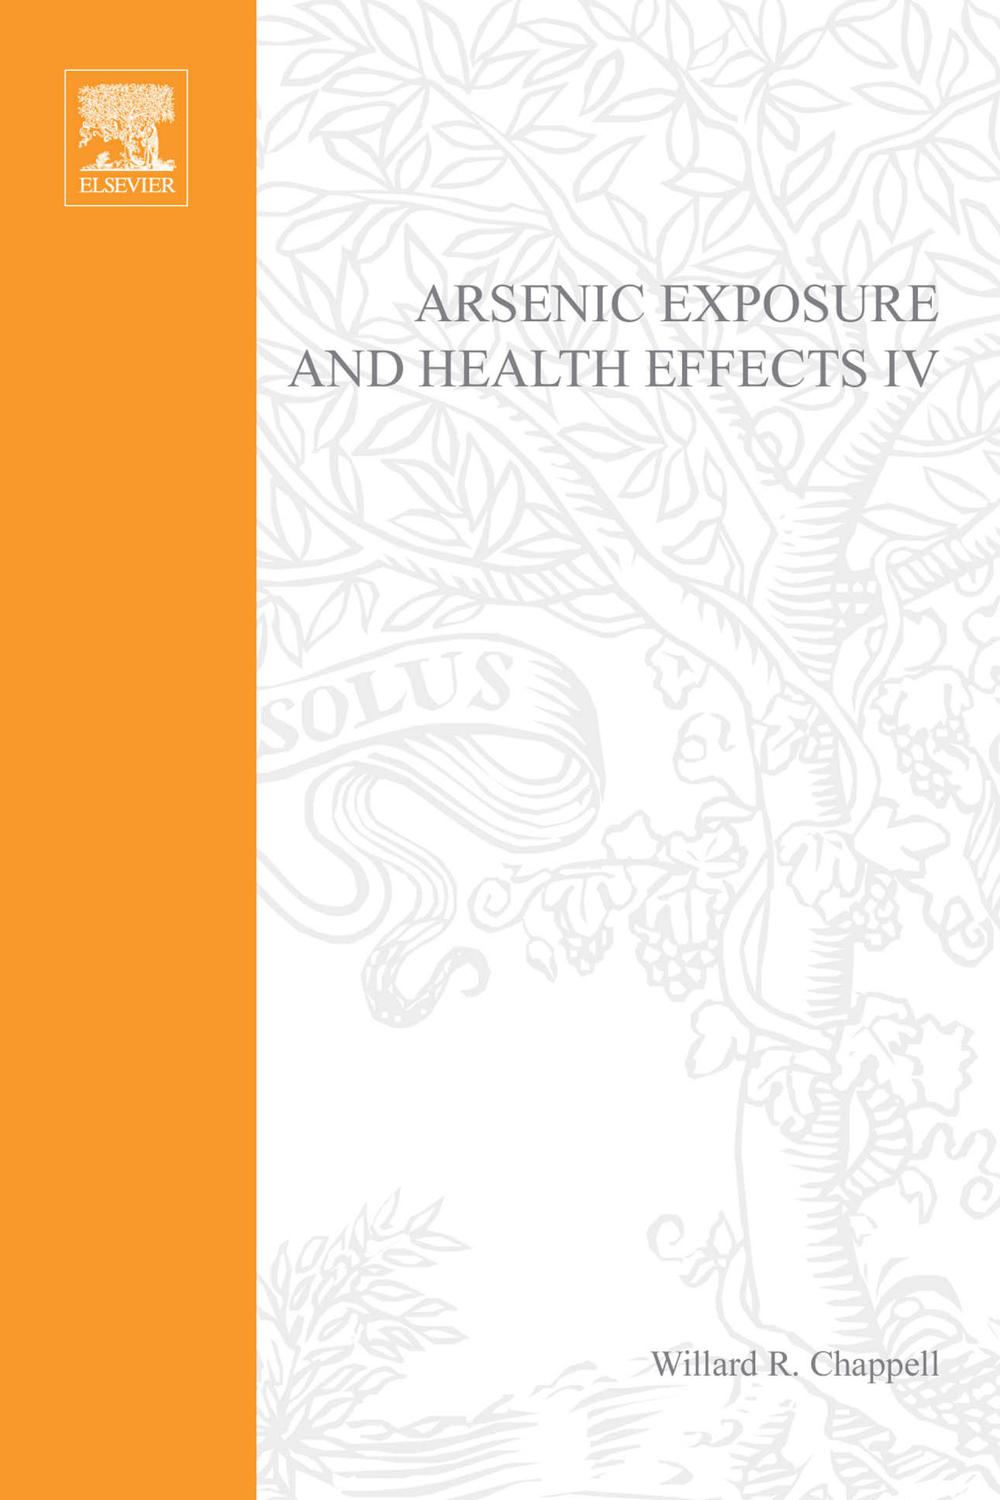 Arsenic Exposure and Health Effects IV - W.R. Chappell, C.O. Abernathy, R.L. Calderon